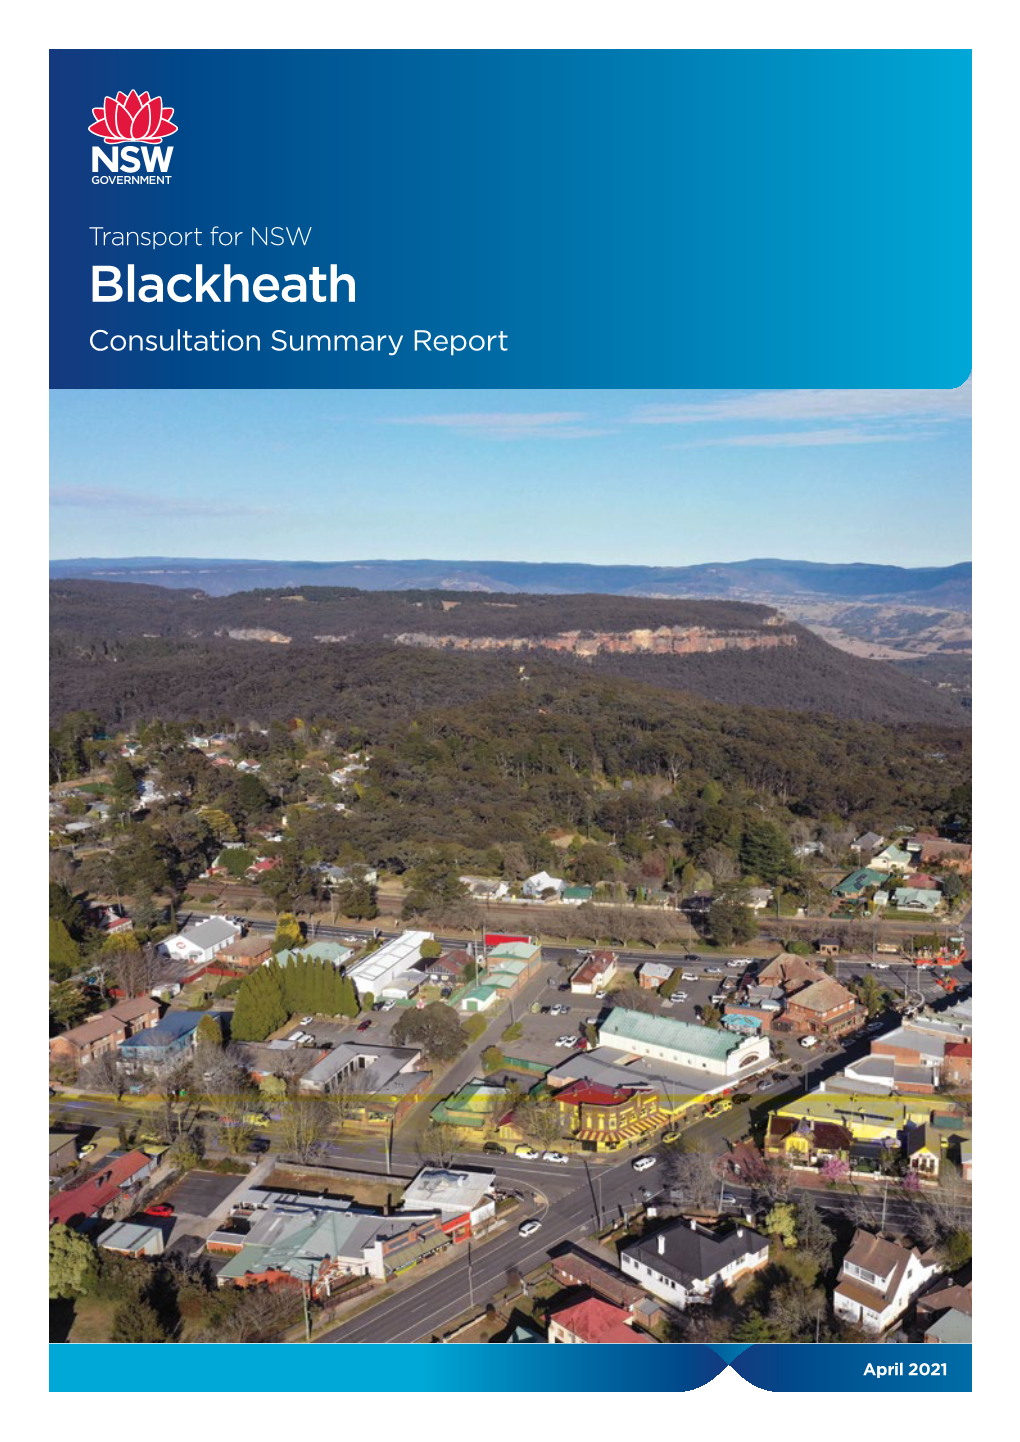 Blackheath Consultation Summary Report